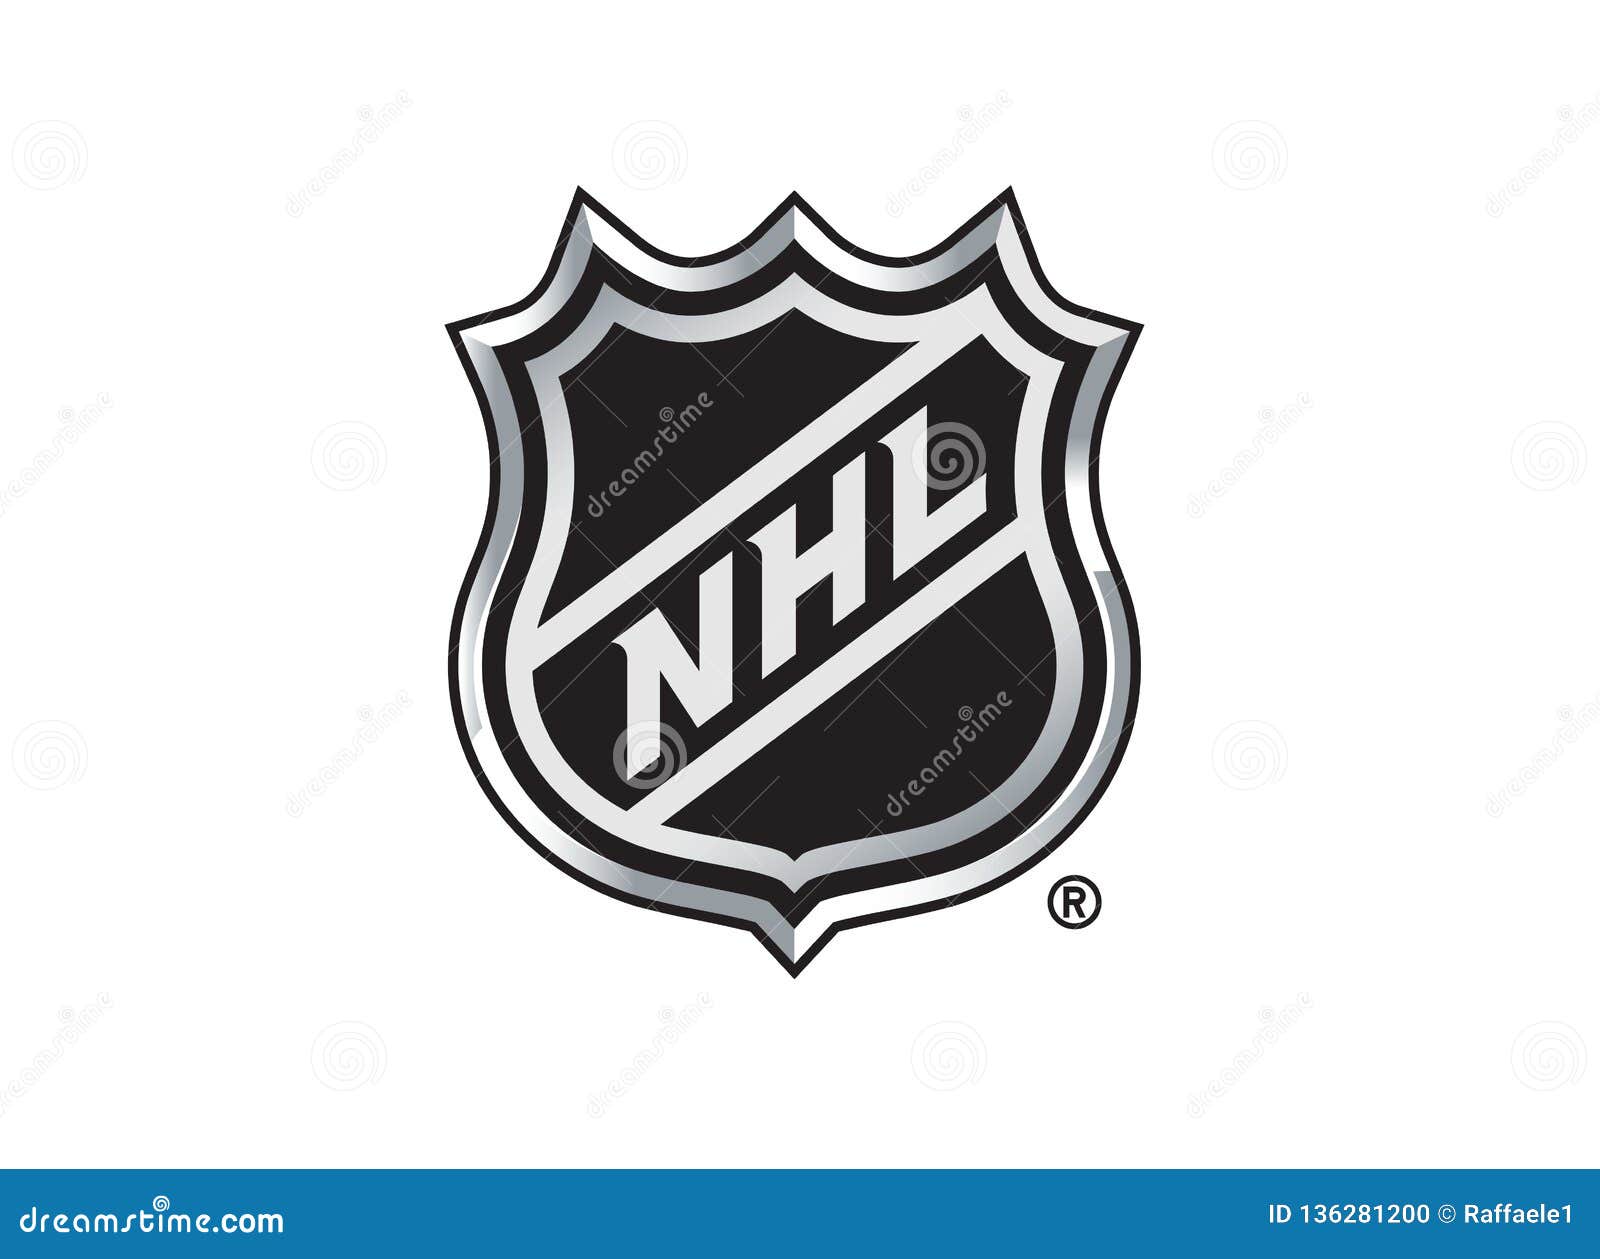 New York Rangers Jersey Letters Rangers SVG - Free Sports Logo Downloads